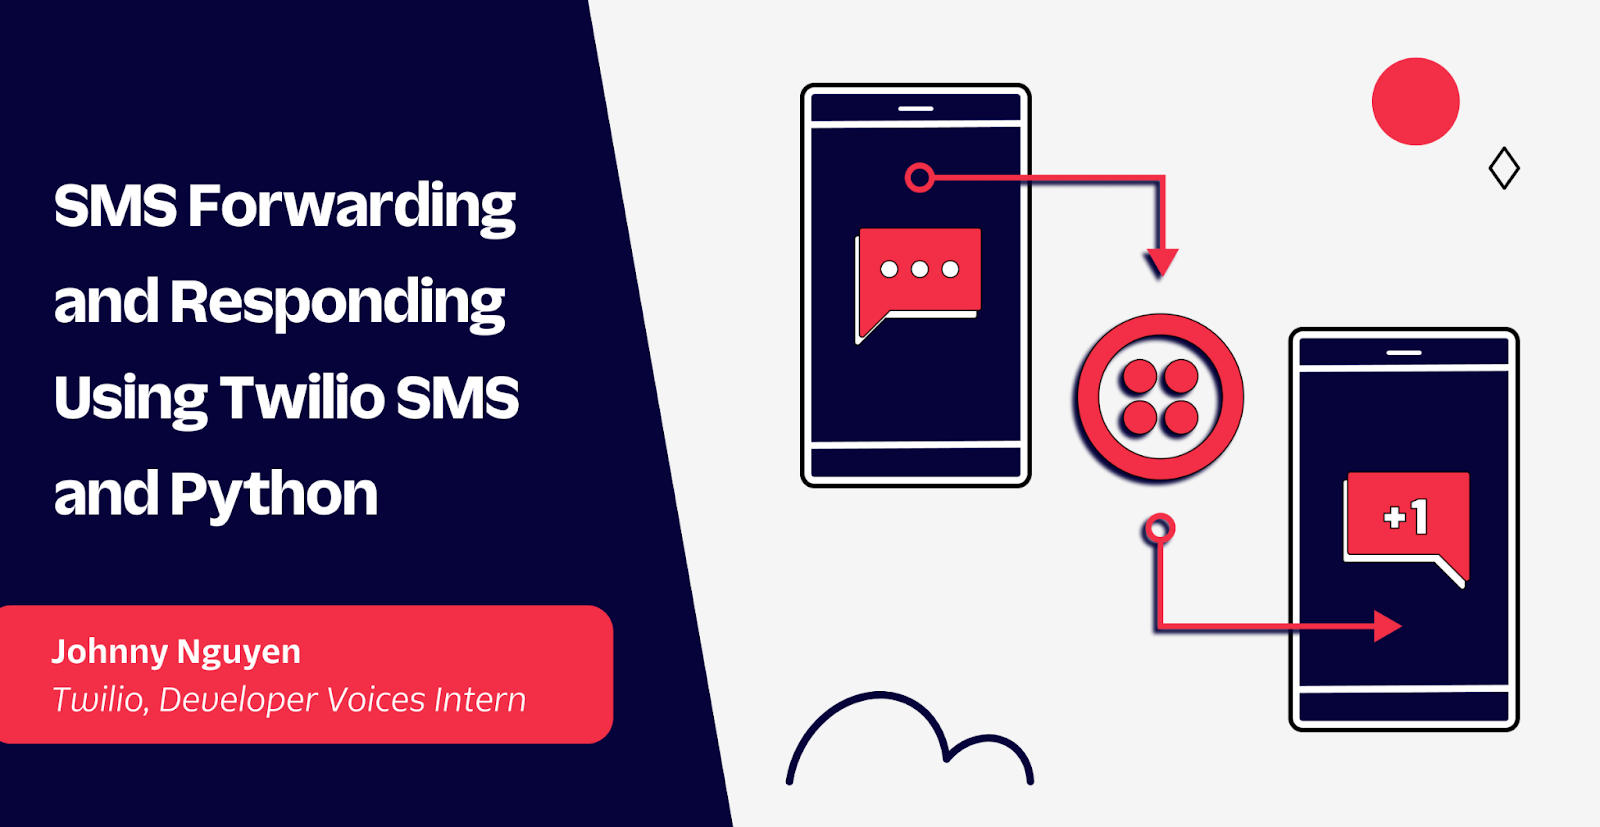 SMS Forwarding and Responding Using Twilio SMS and Python